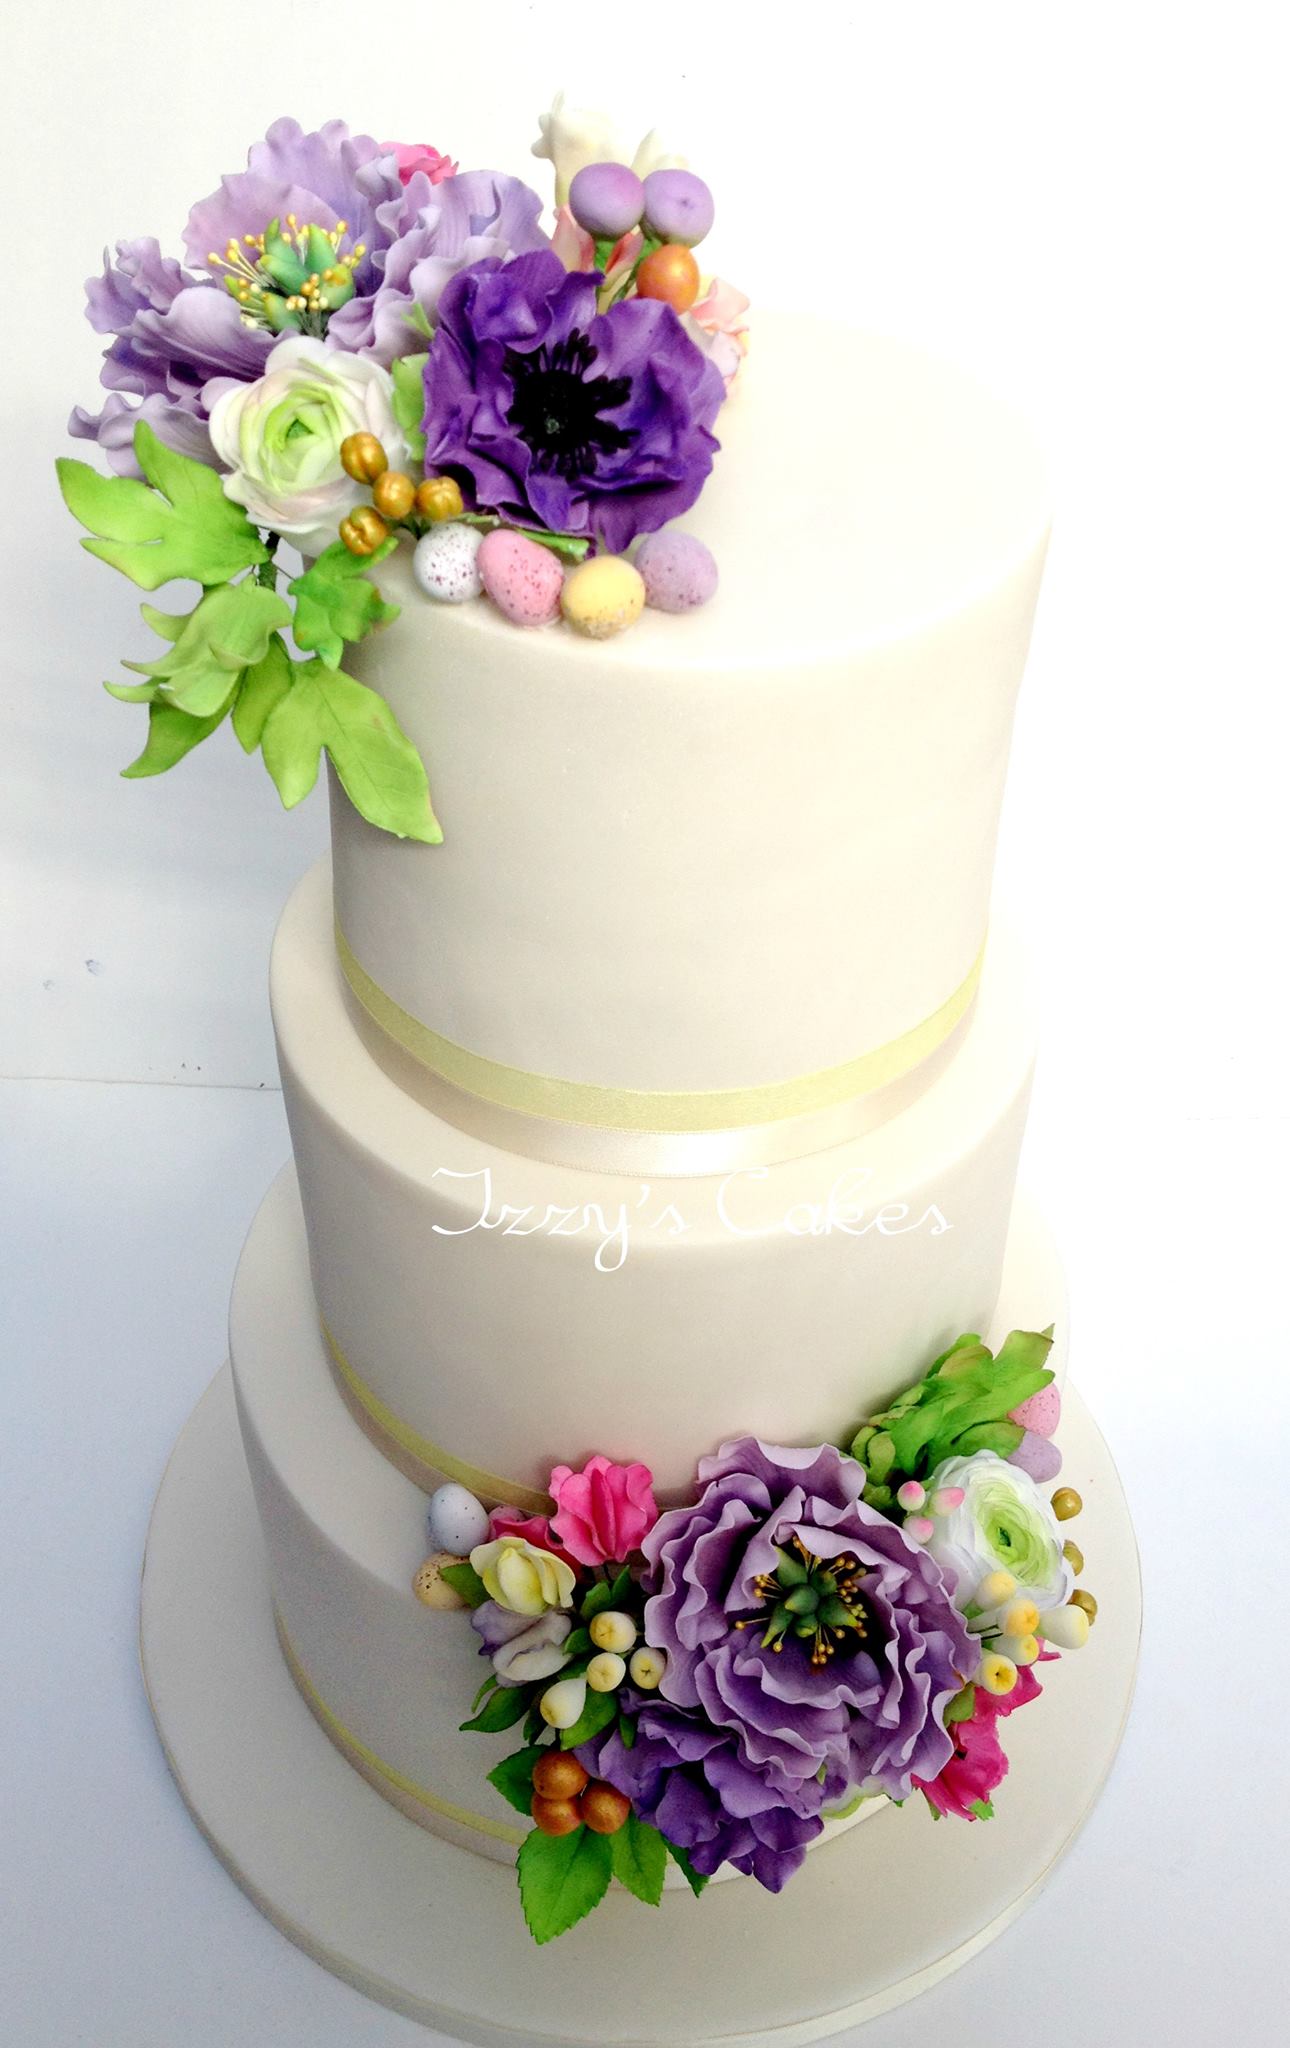 Easter wedding cake by Isabelle Payne - Isabelle's Cake Design